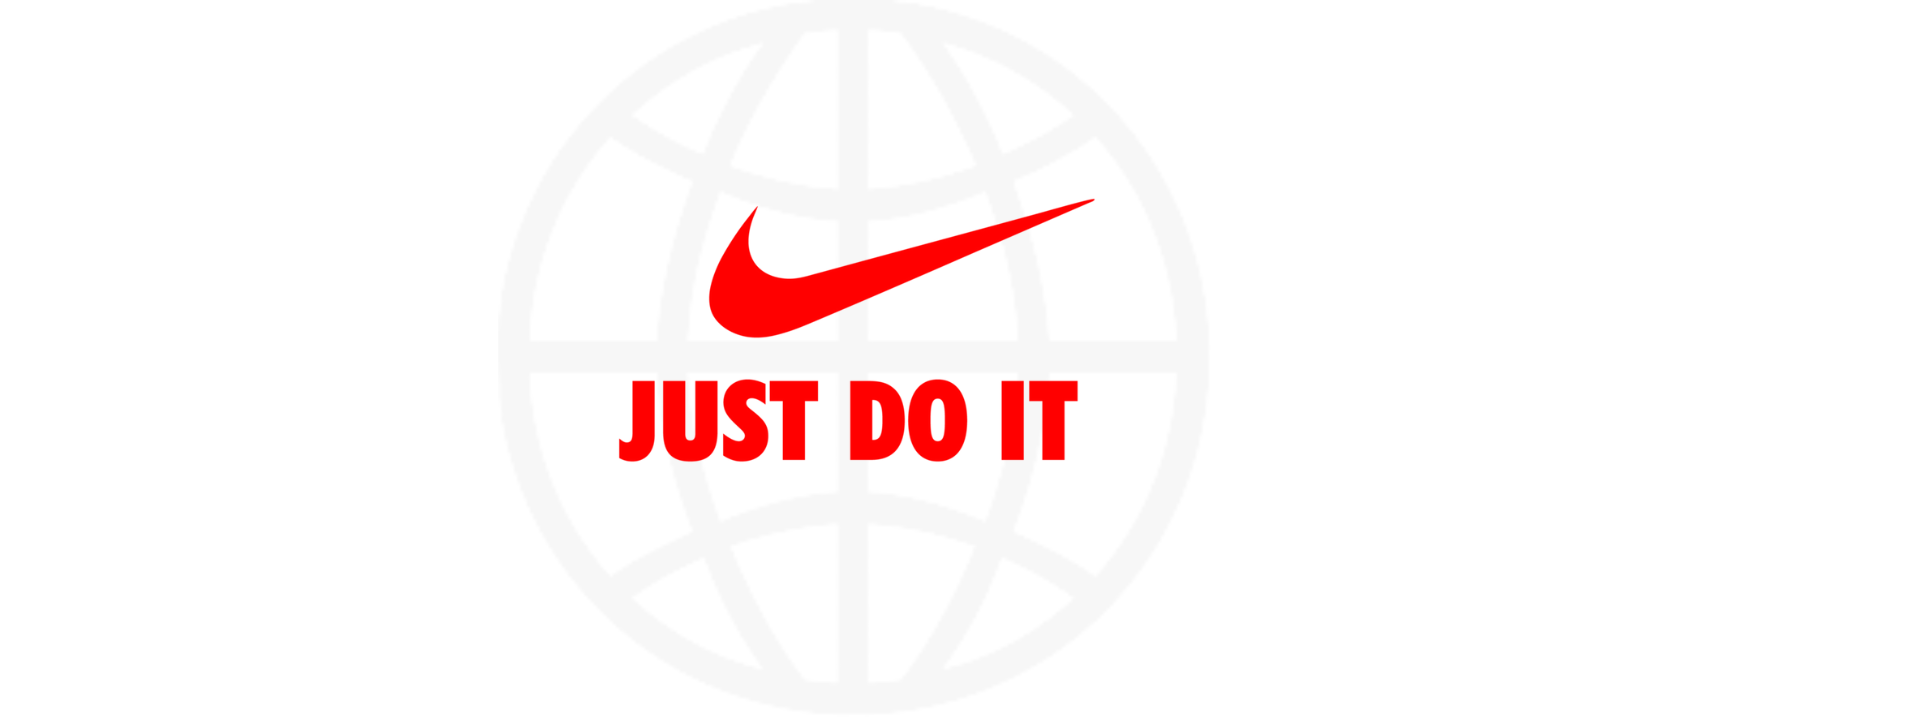 Just Do It - Nike marketinška kampanja